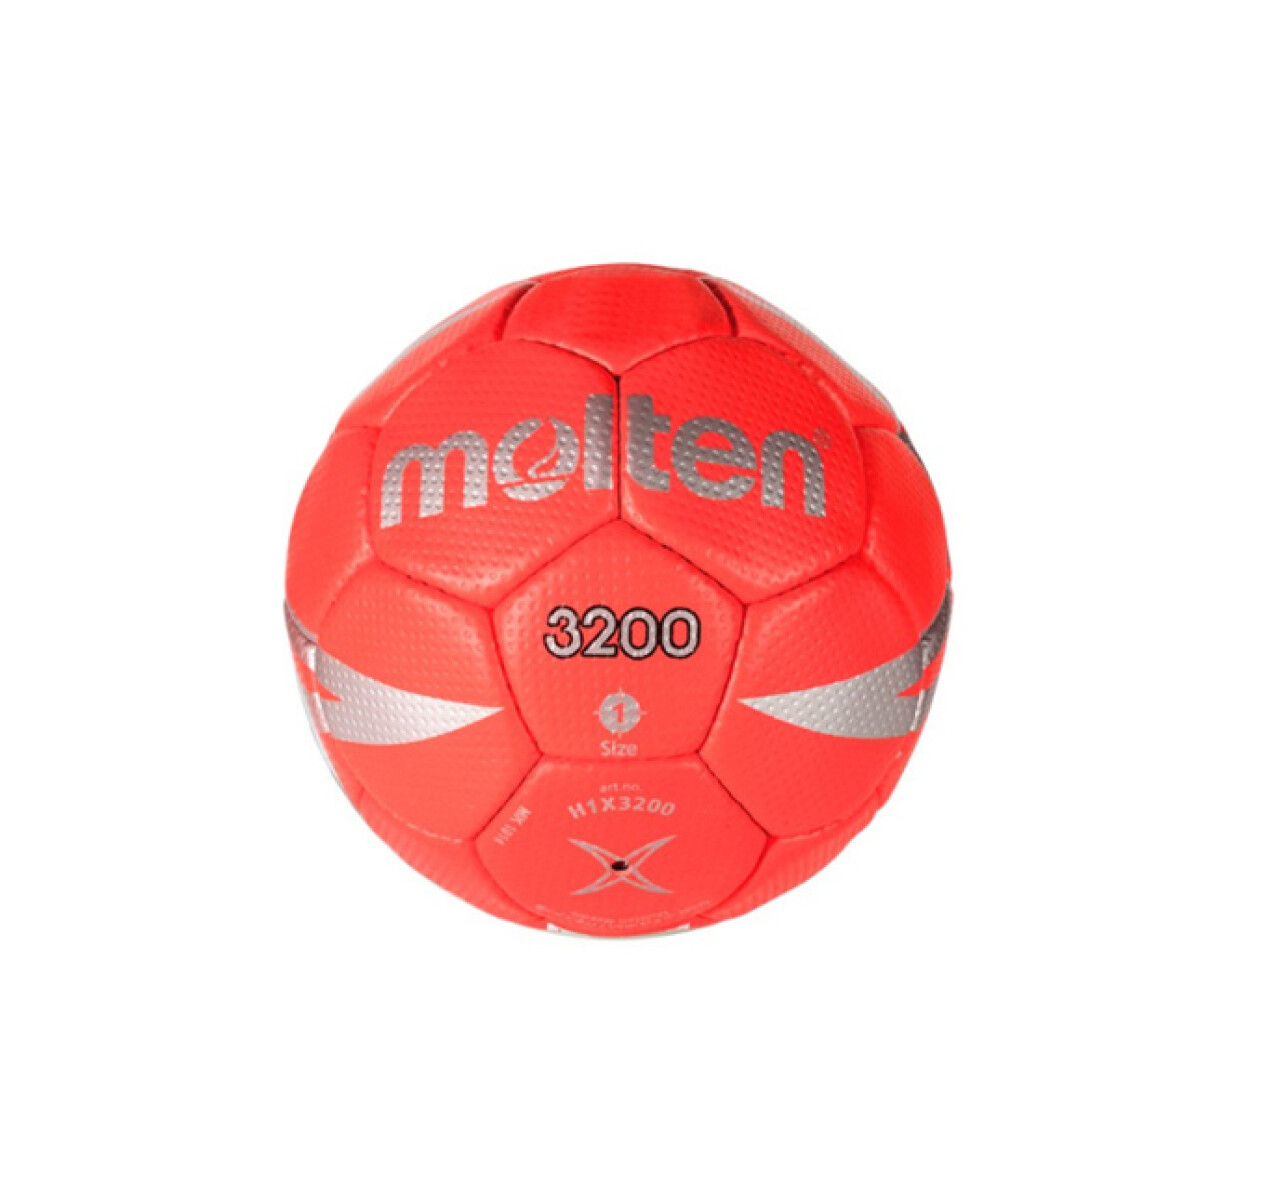 Pelota para handball Molten 3200 N1 